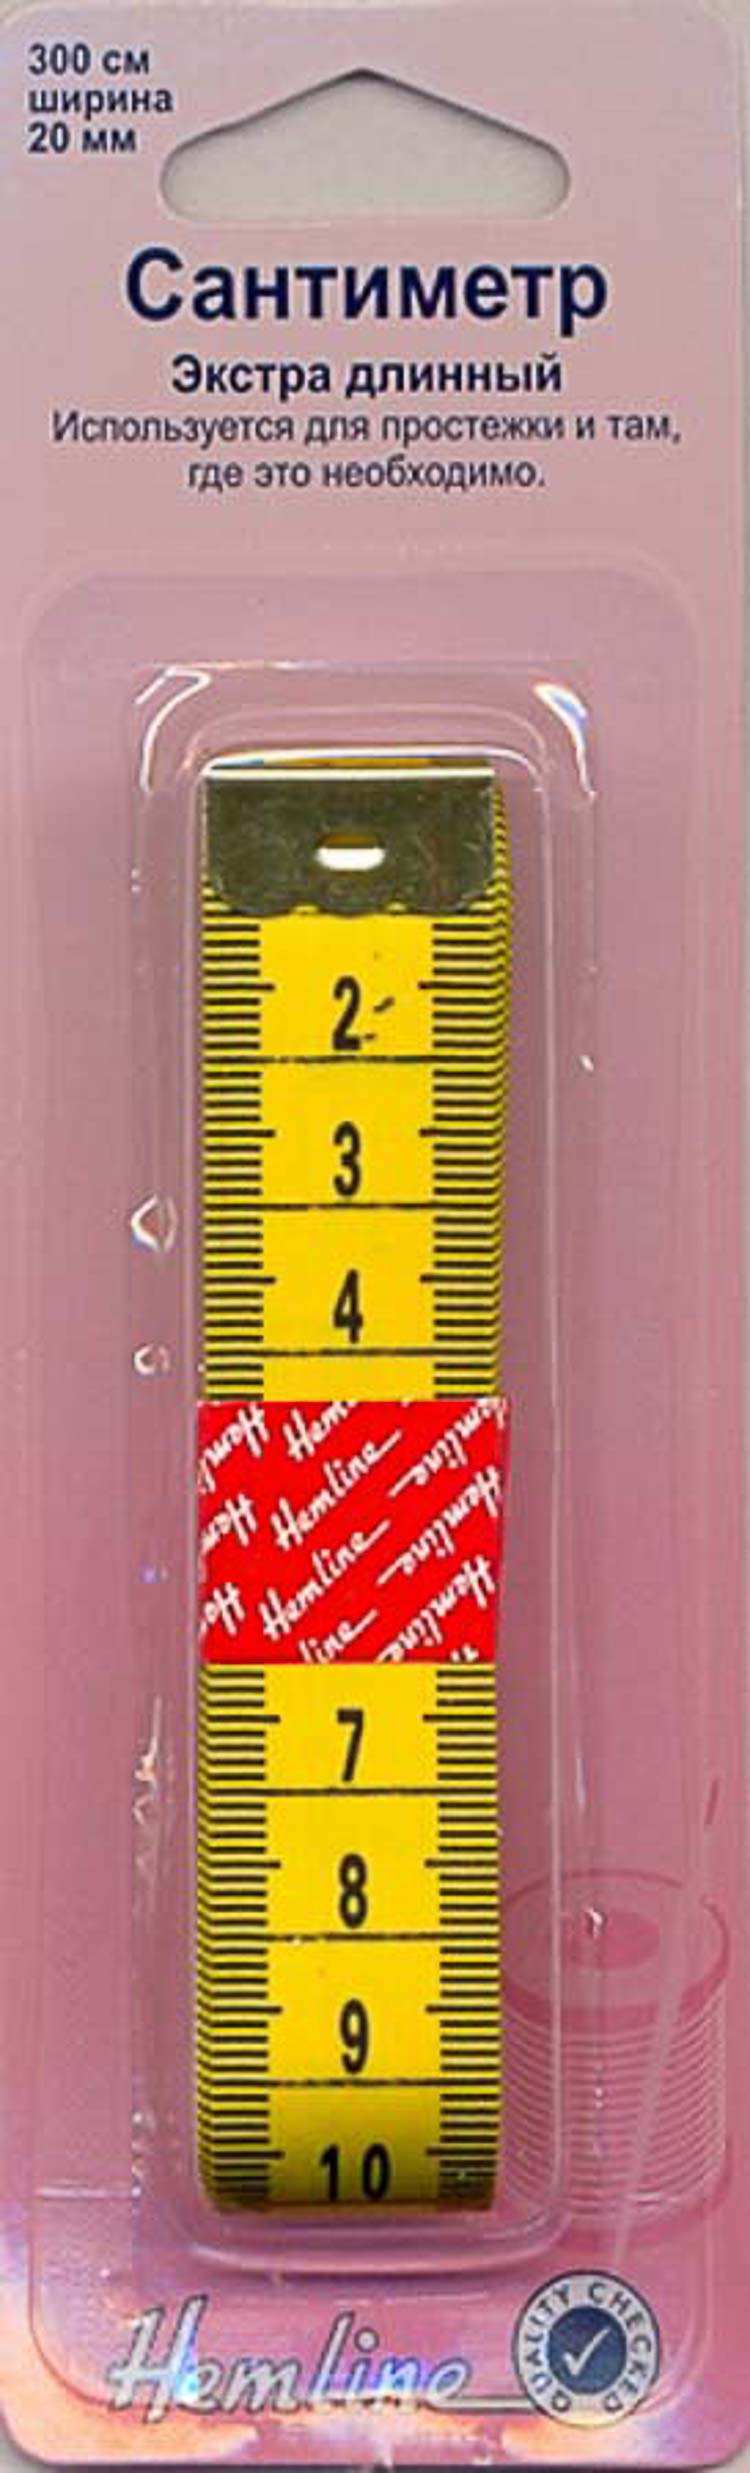 Сантиметр "Hemline" 256, экстра-длинный 300 см, 20 мм